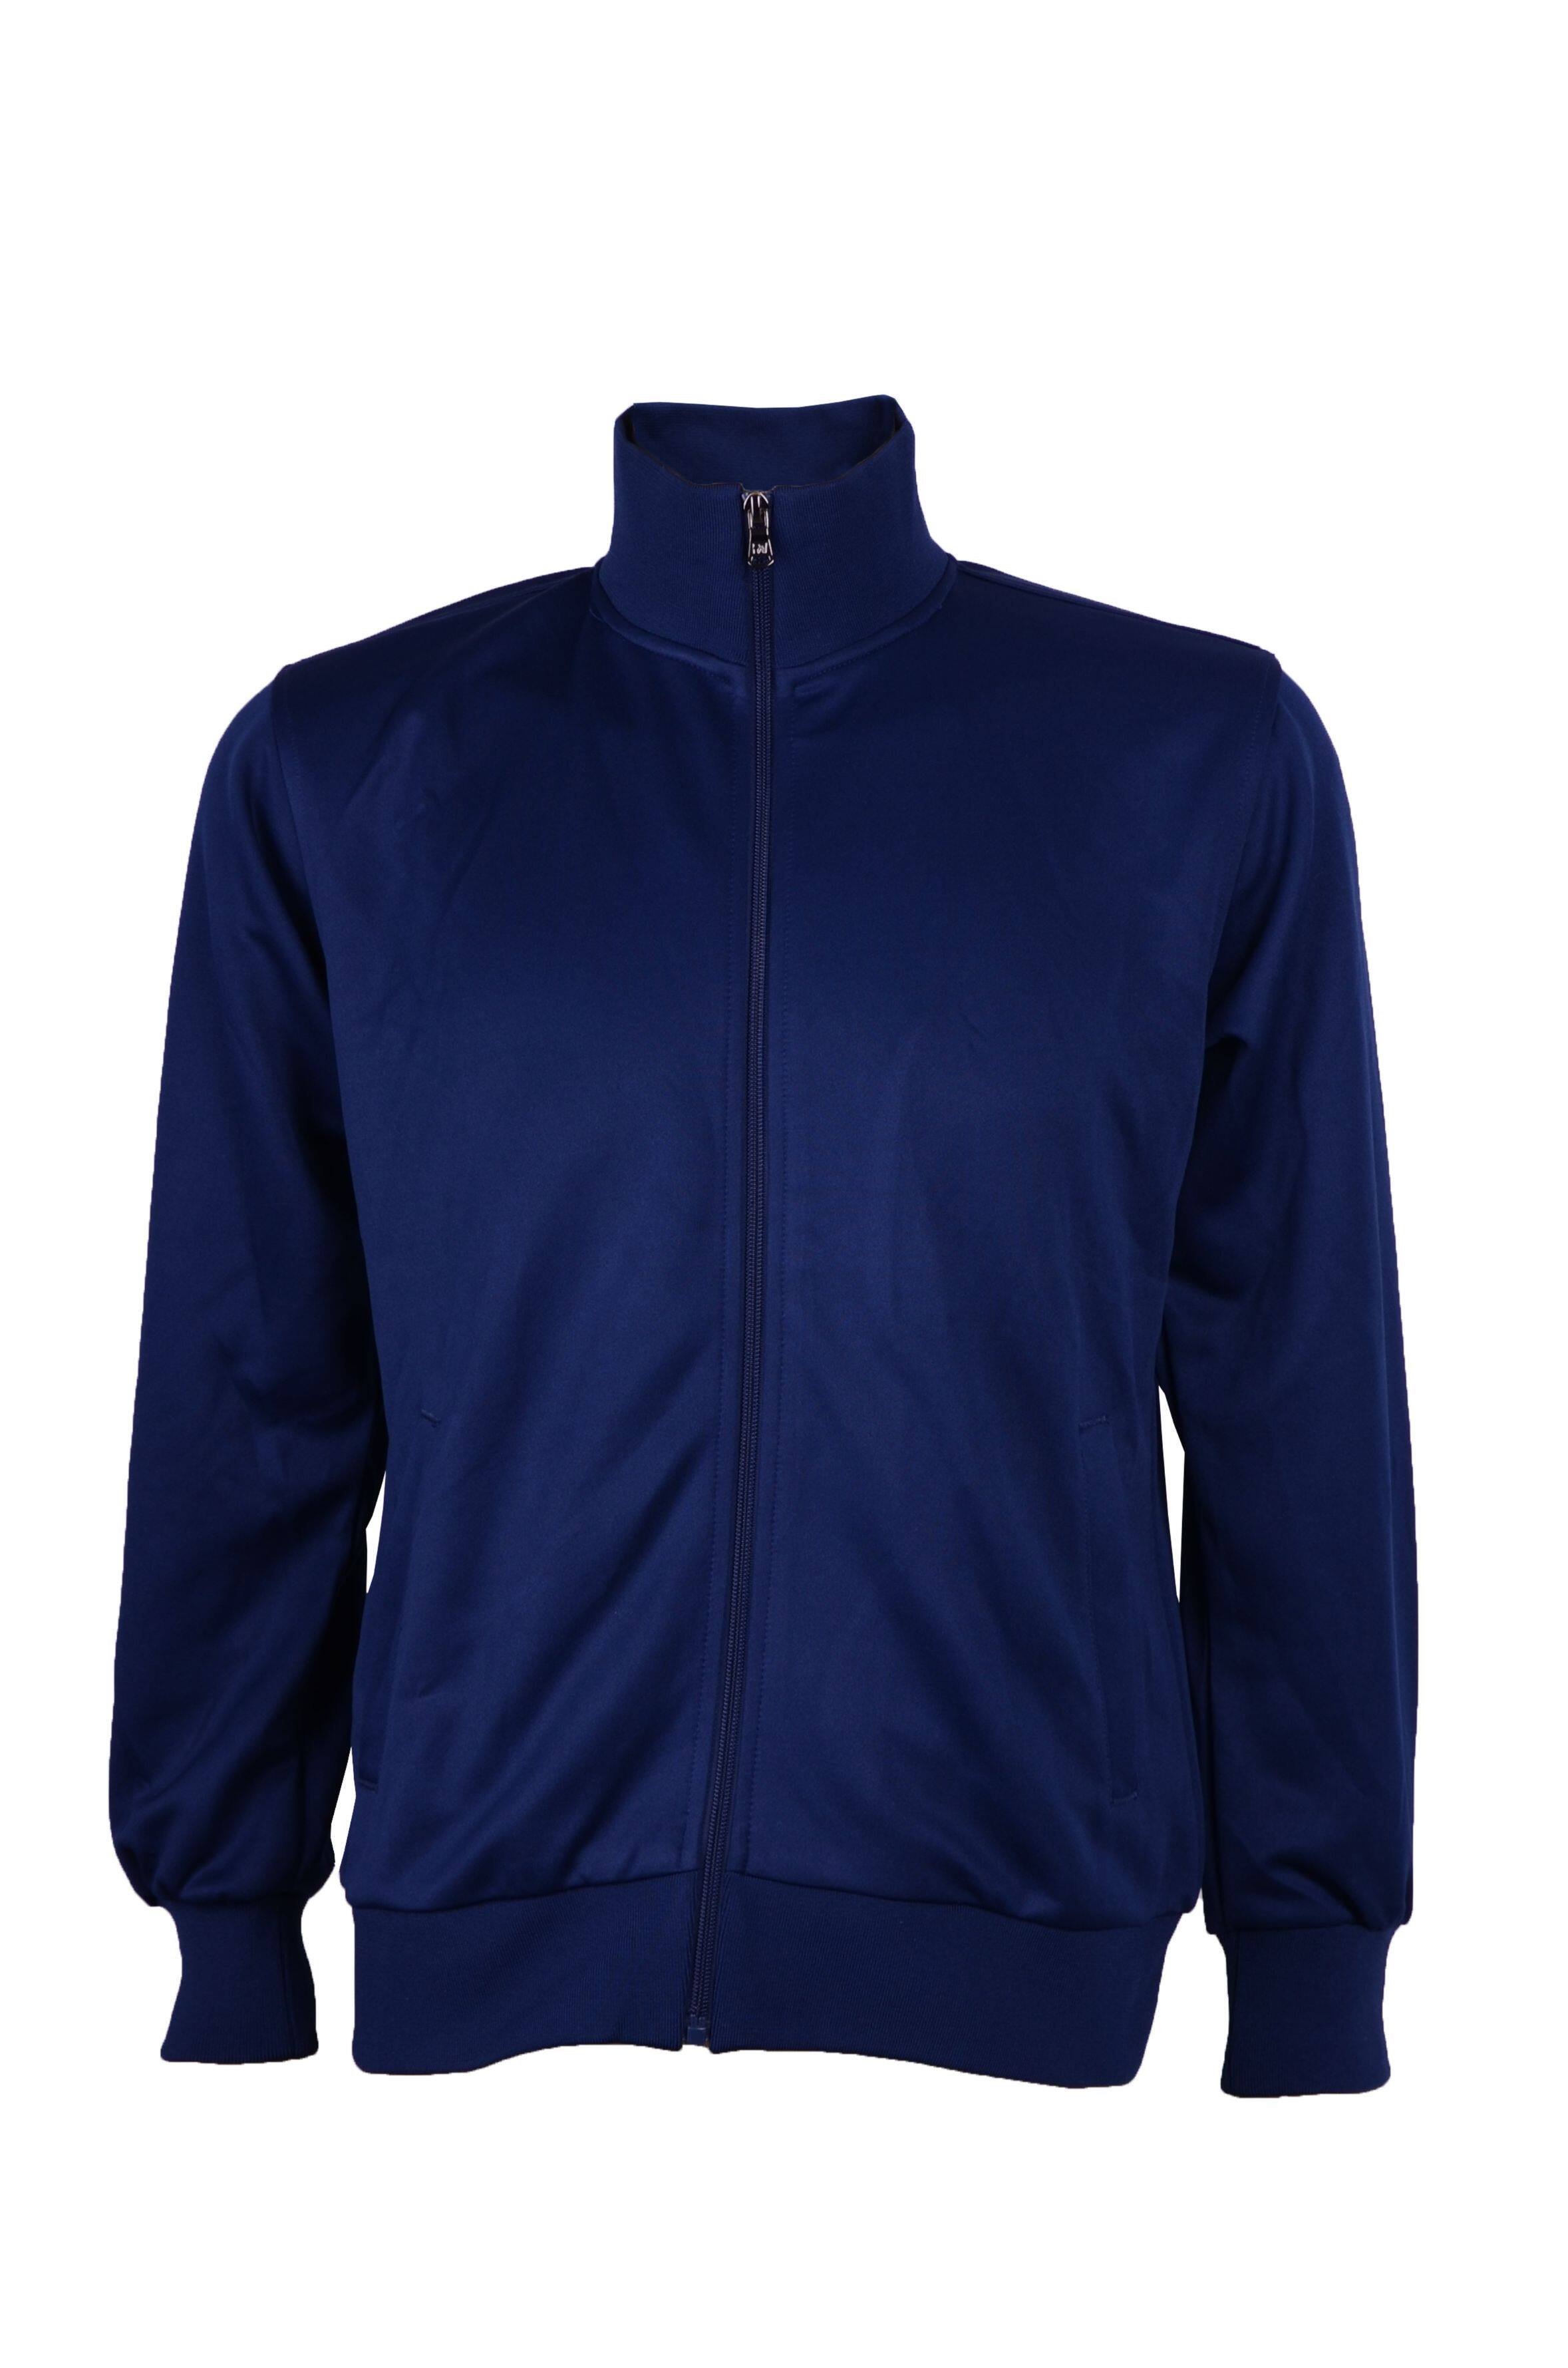 RIGHTWAY Unisex  Small Size 2XS Outrefit Premium Multi Purpose Track Jacket Suit TJ1